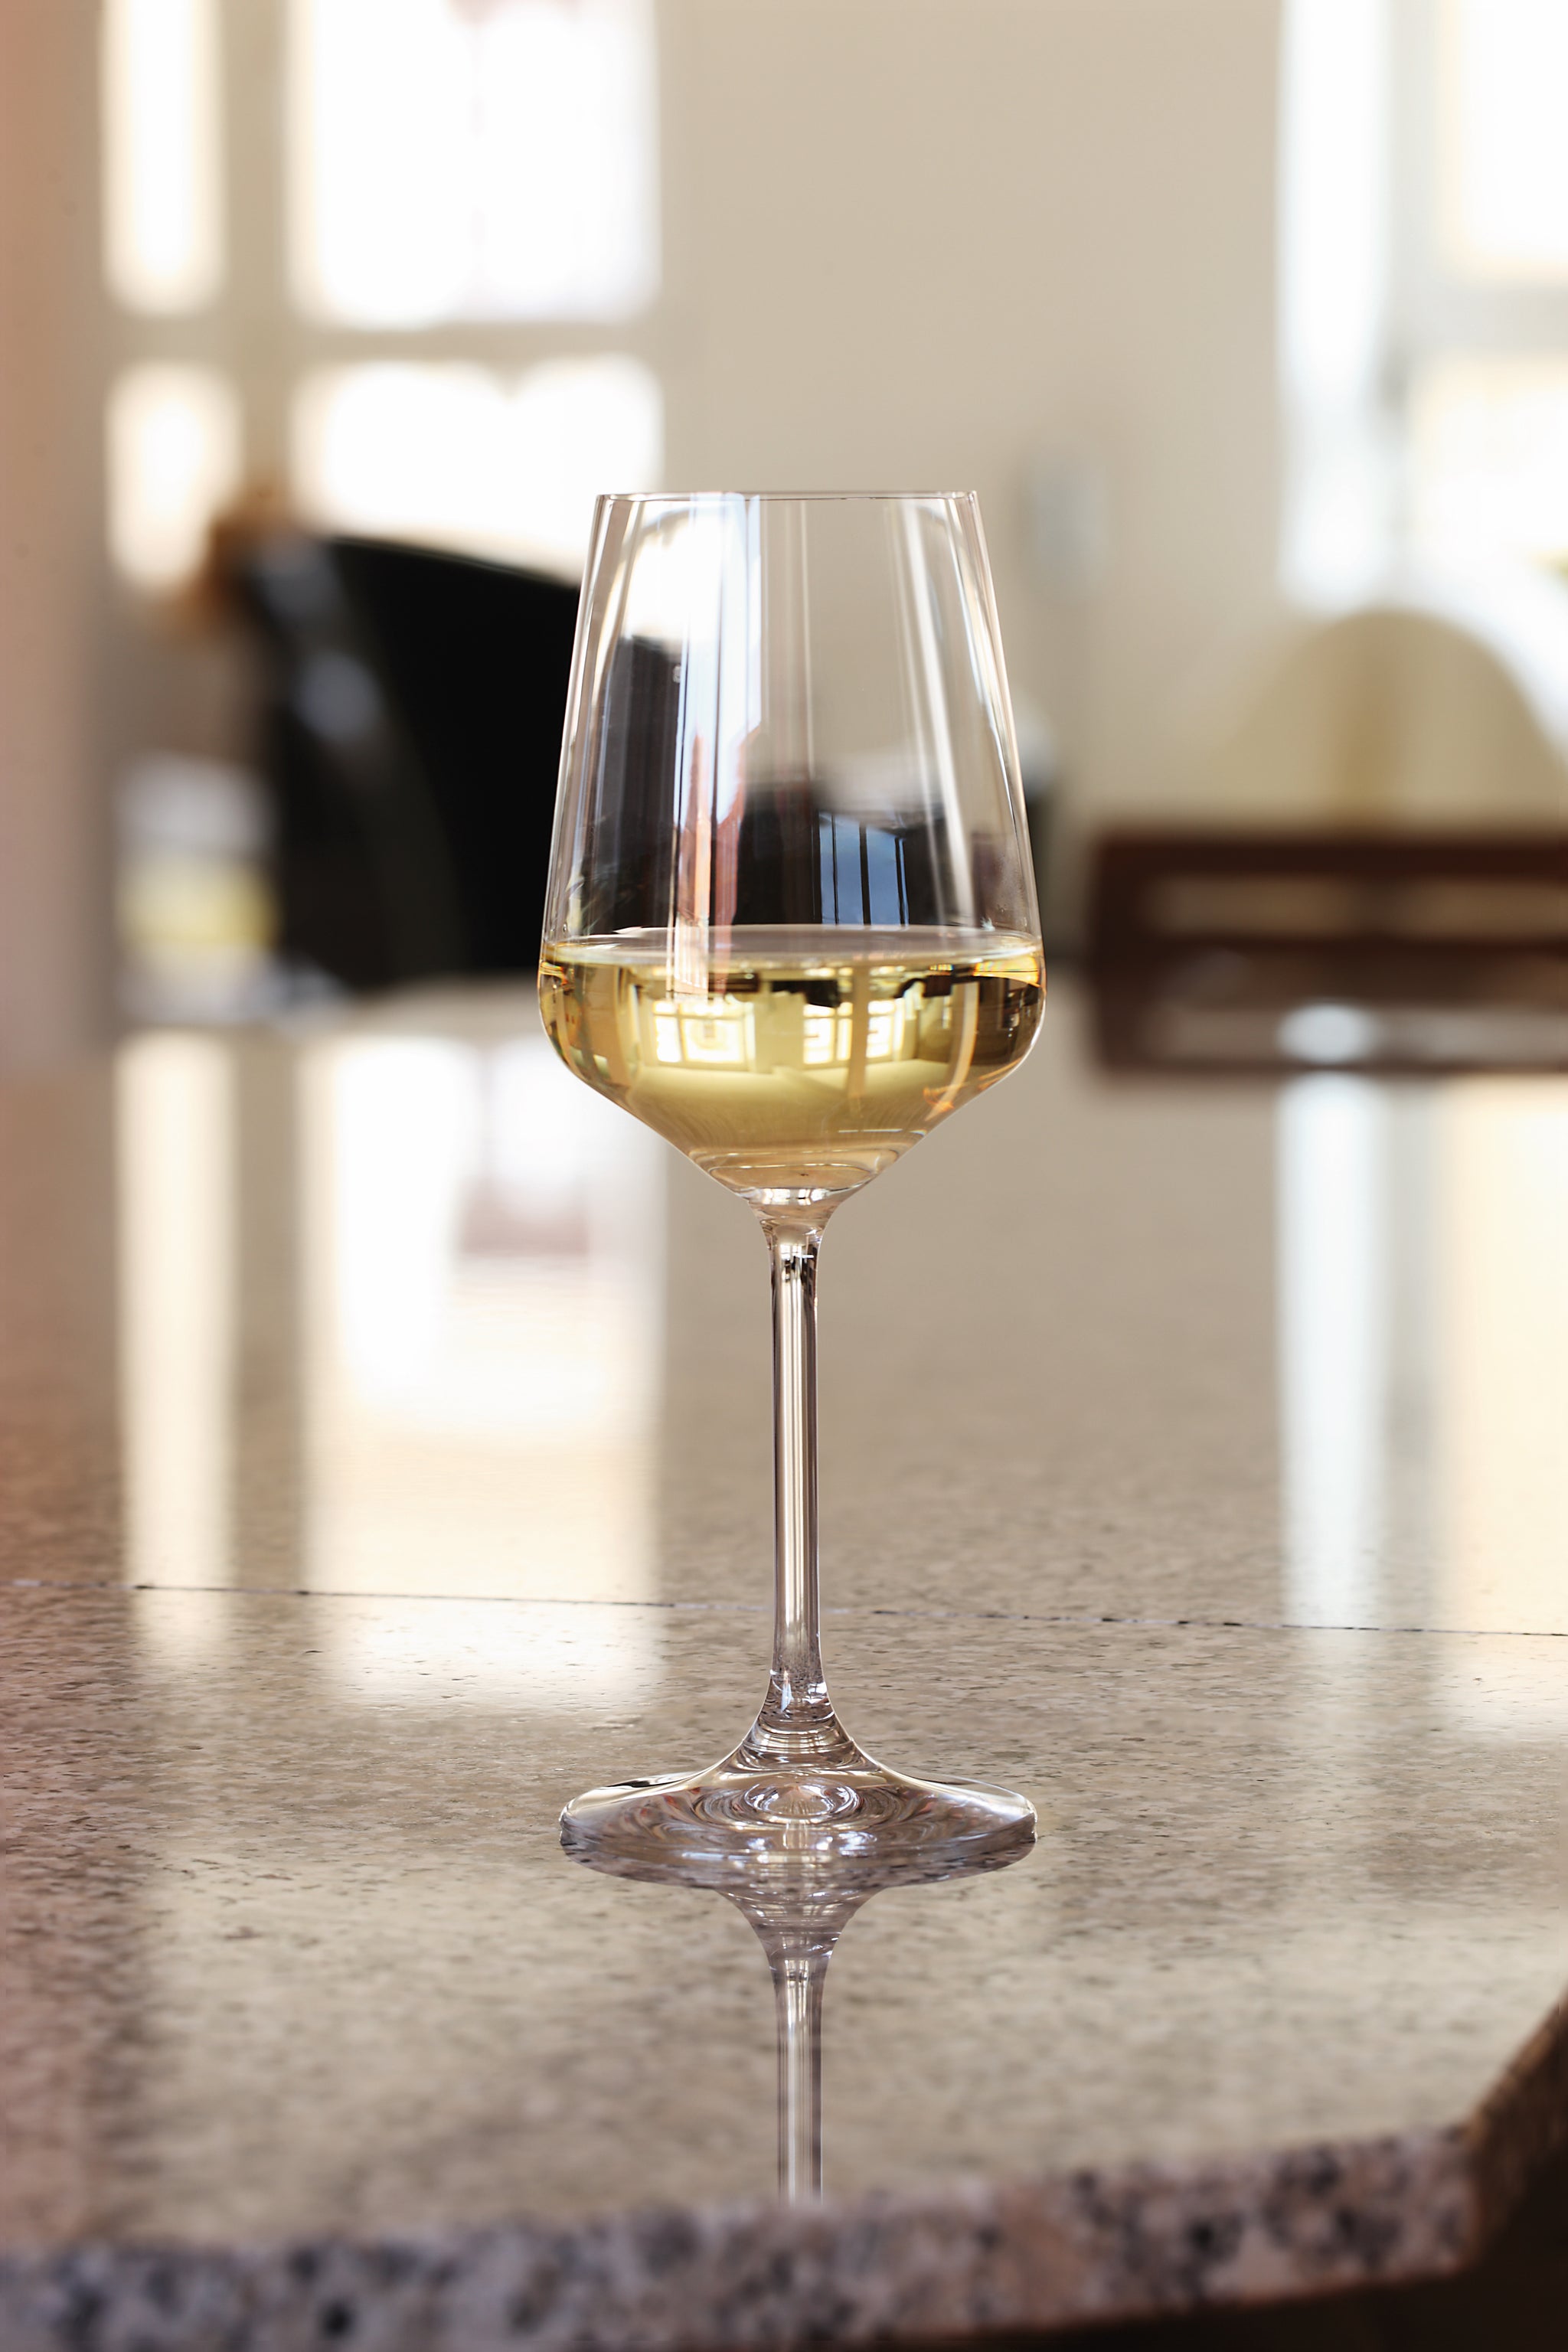 Spiegelau Style White Wine Glasses, Set of 4